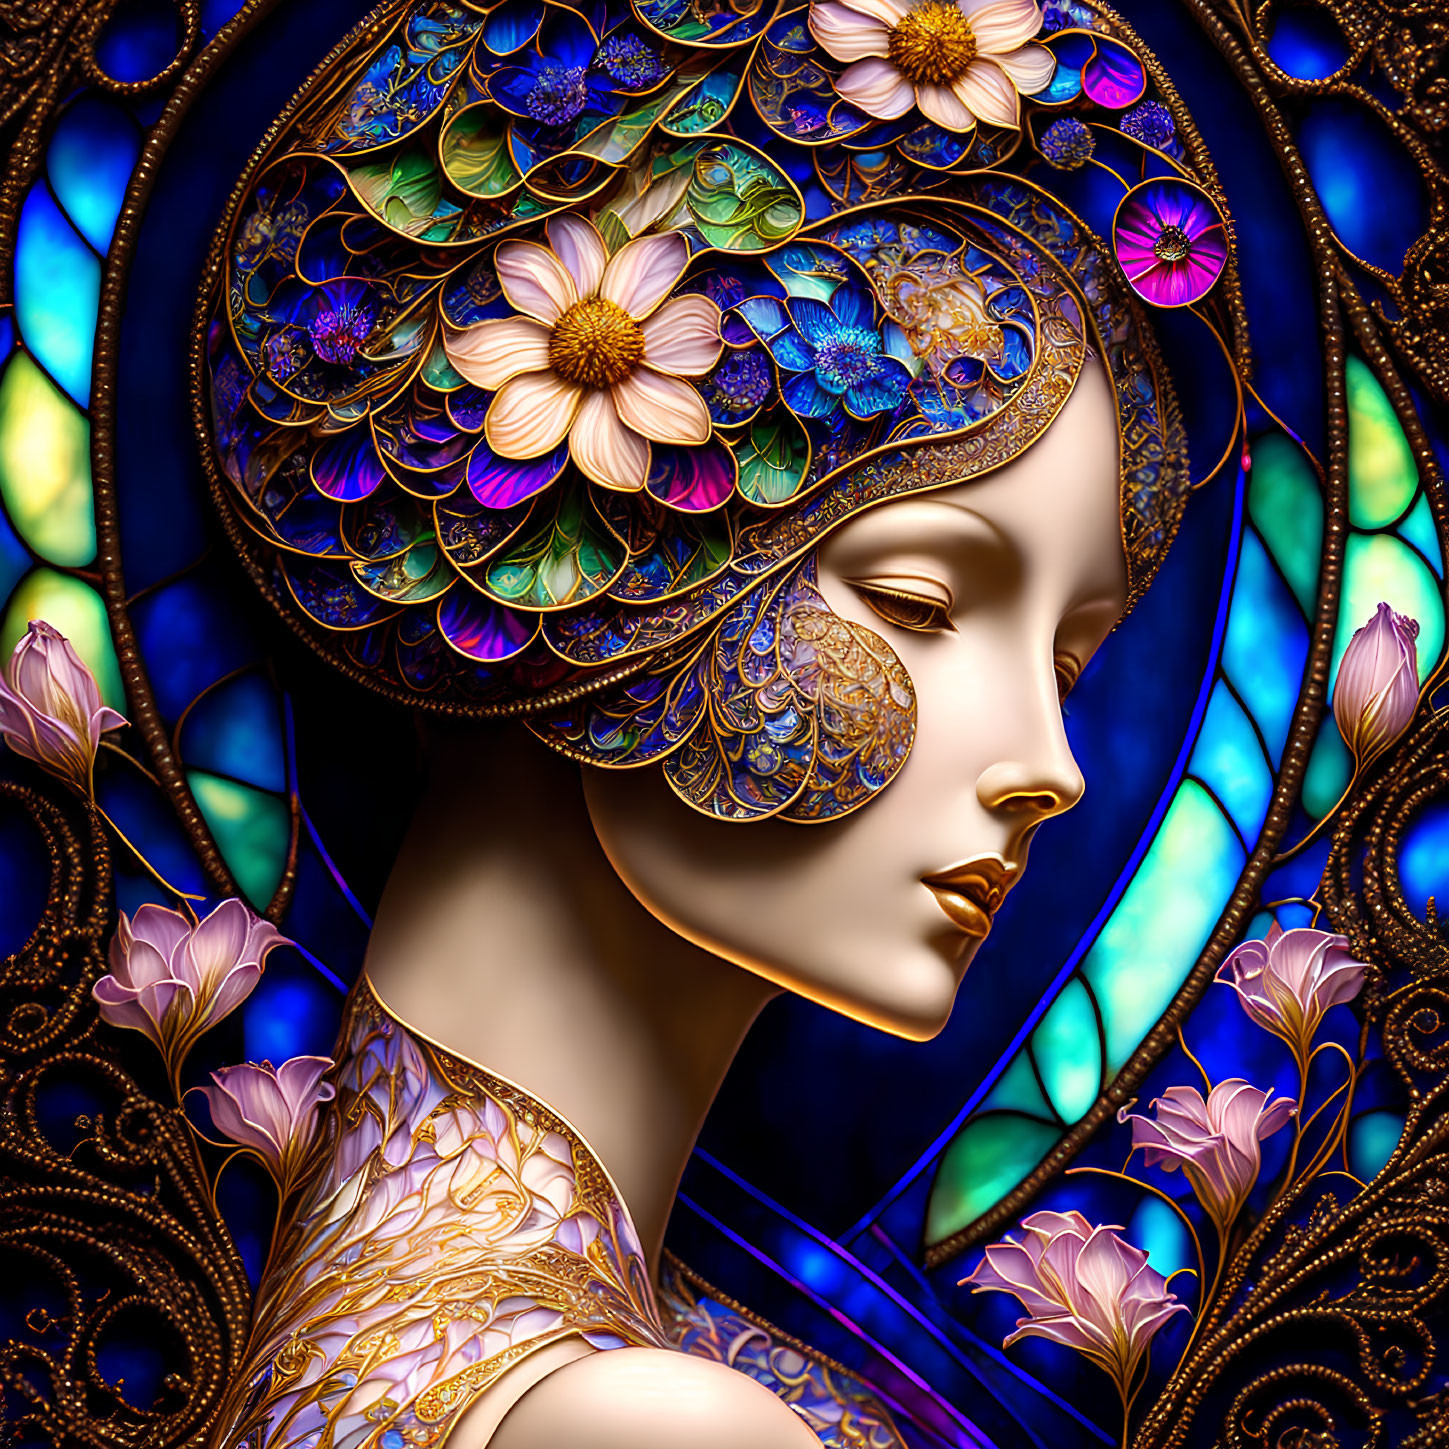 Intricate Jewel-Toned Floral Motifs Surrounding Woman's Profile